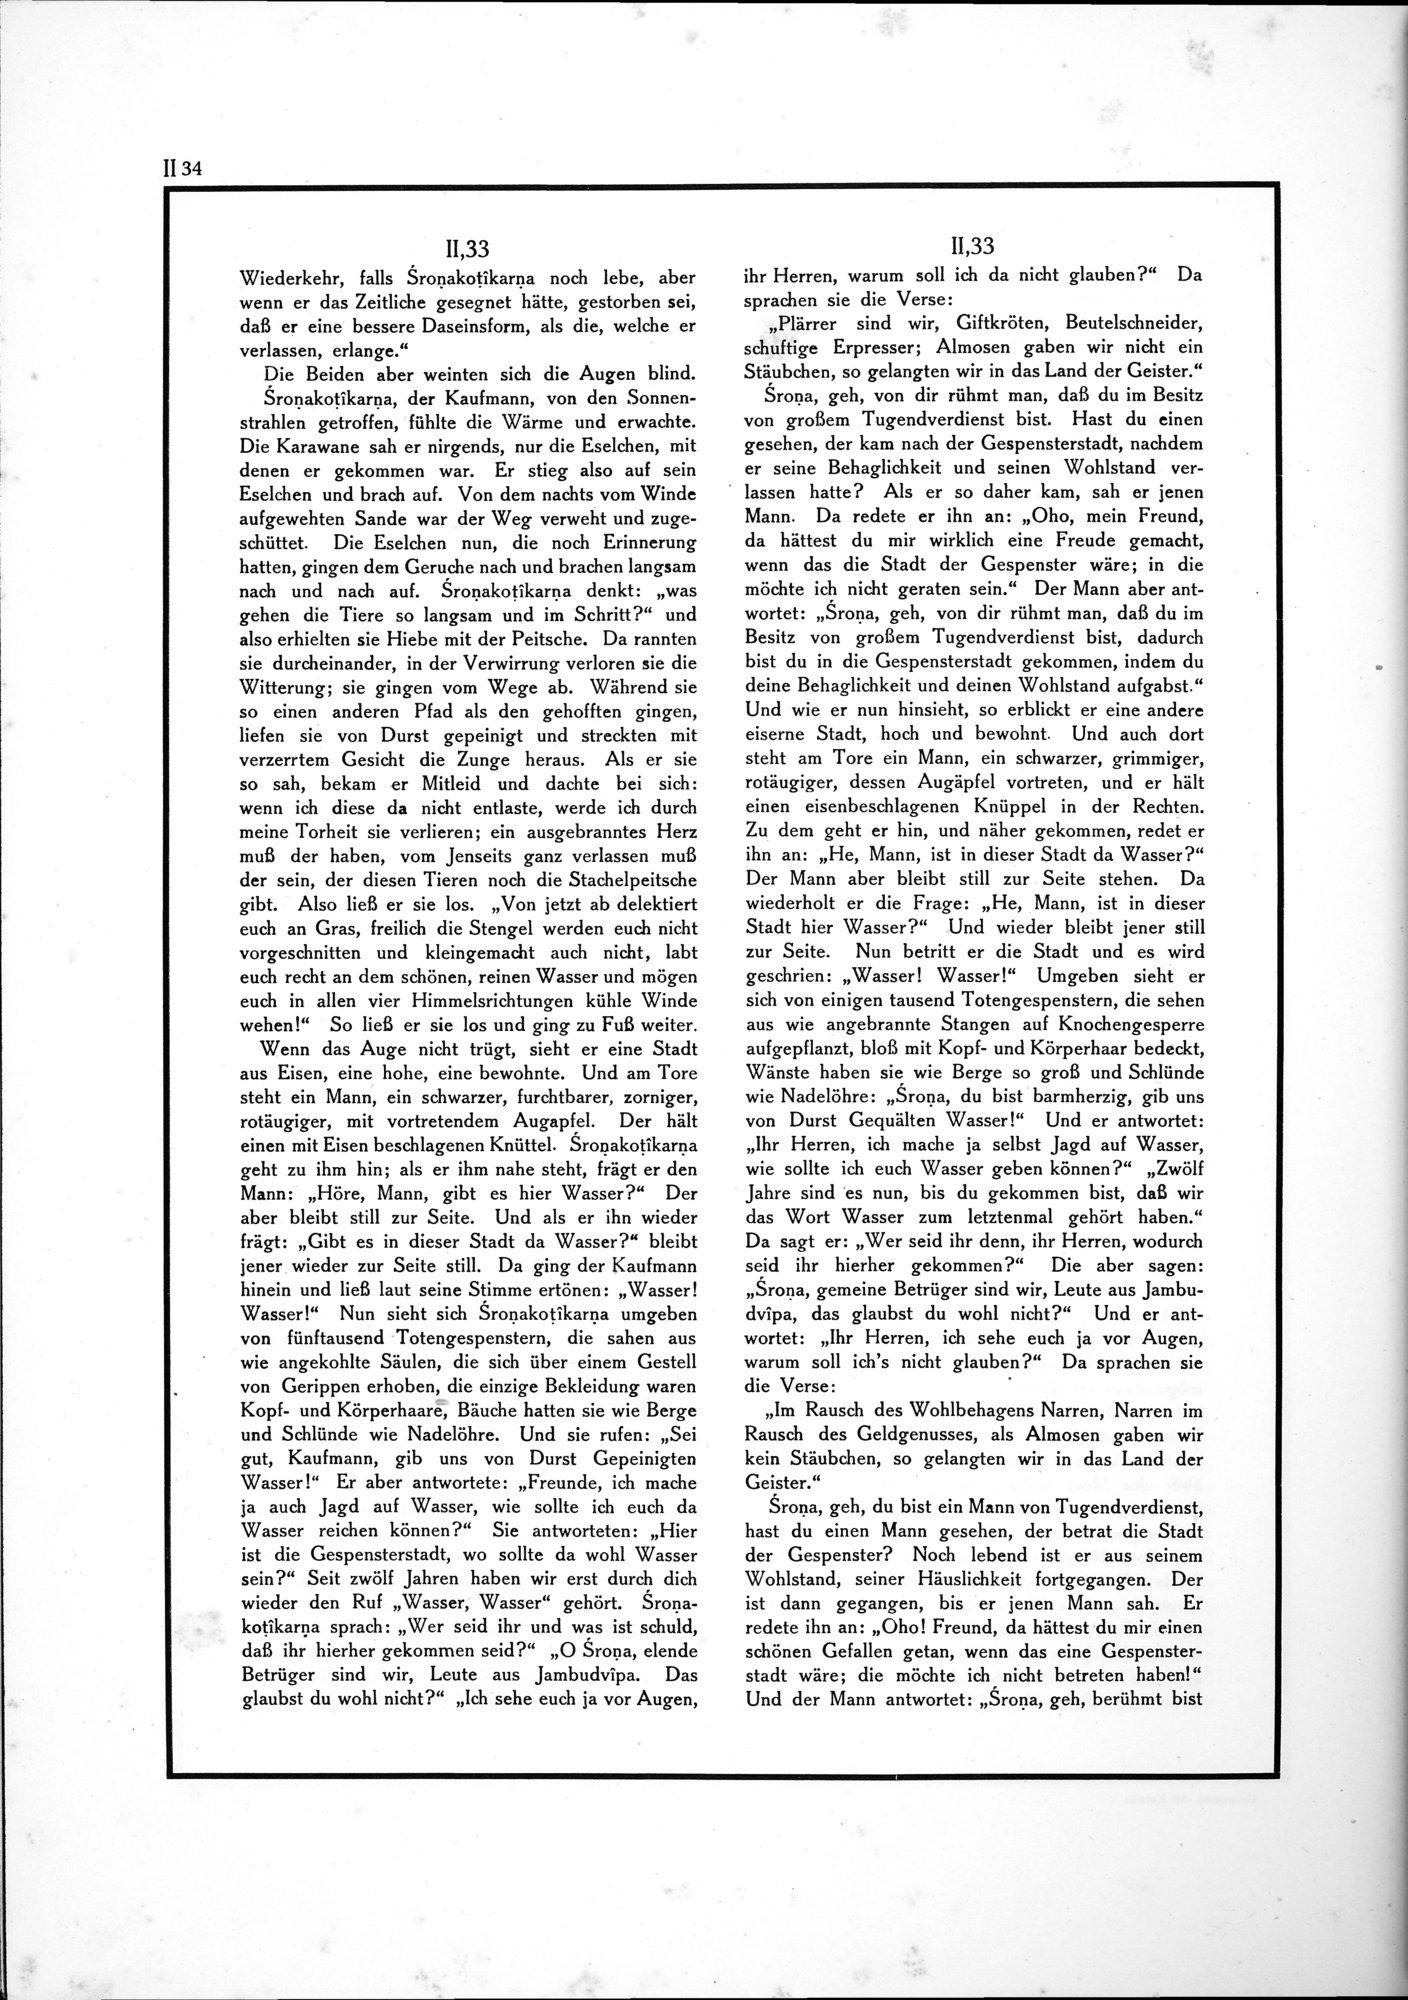 Alt-Kutscha : vol.1 / Page 140 (Grayscale High Resolution Image)